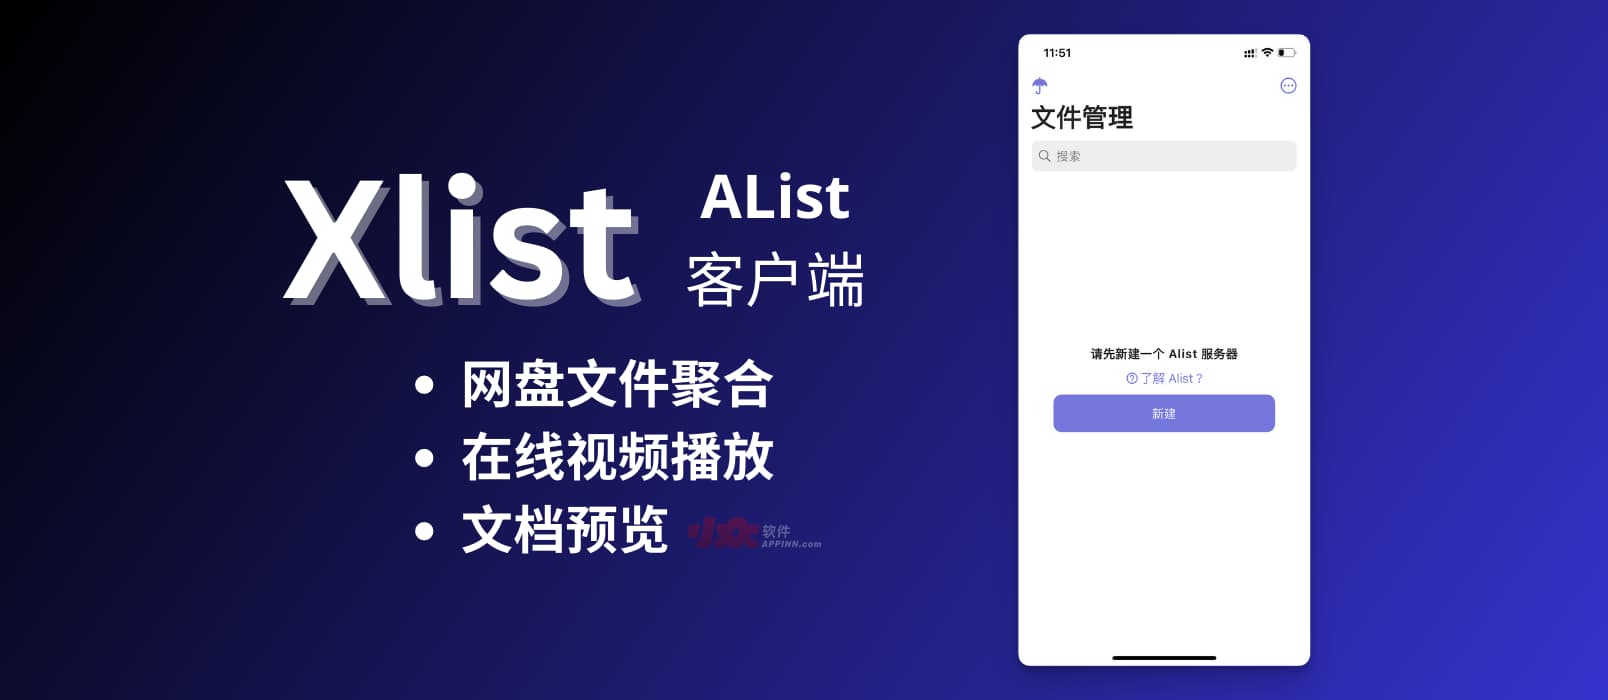 Xlist - AList 手机客户端，网盘文件聚合，支持在线视频播放和文档预览[iPhone]